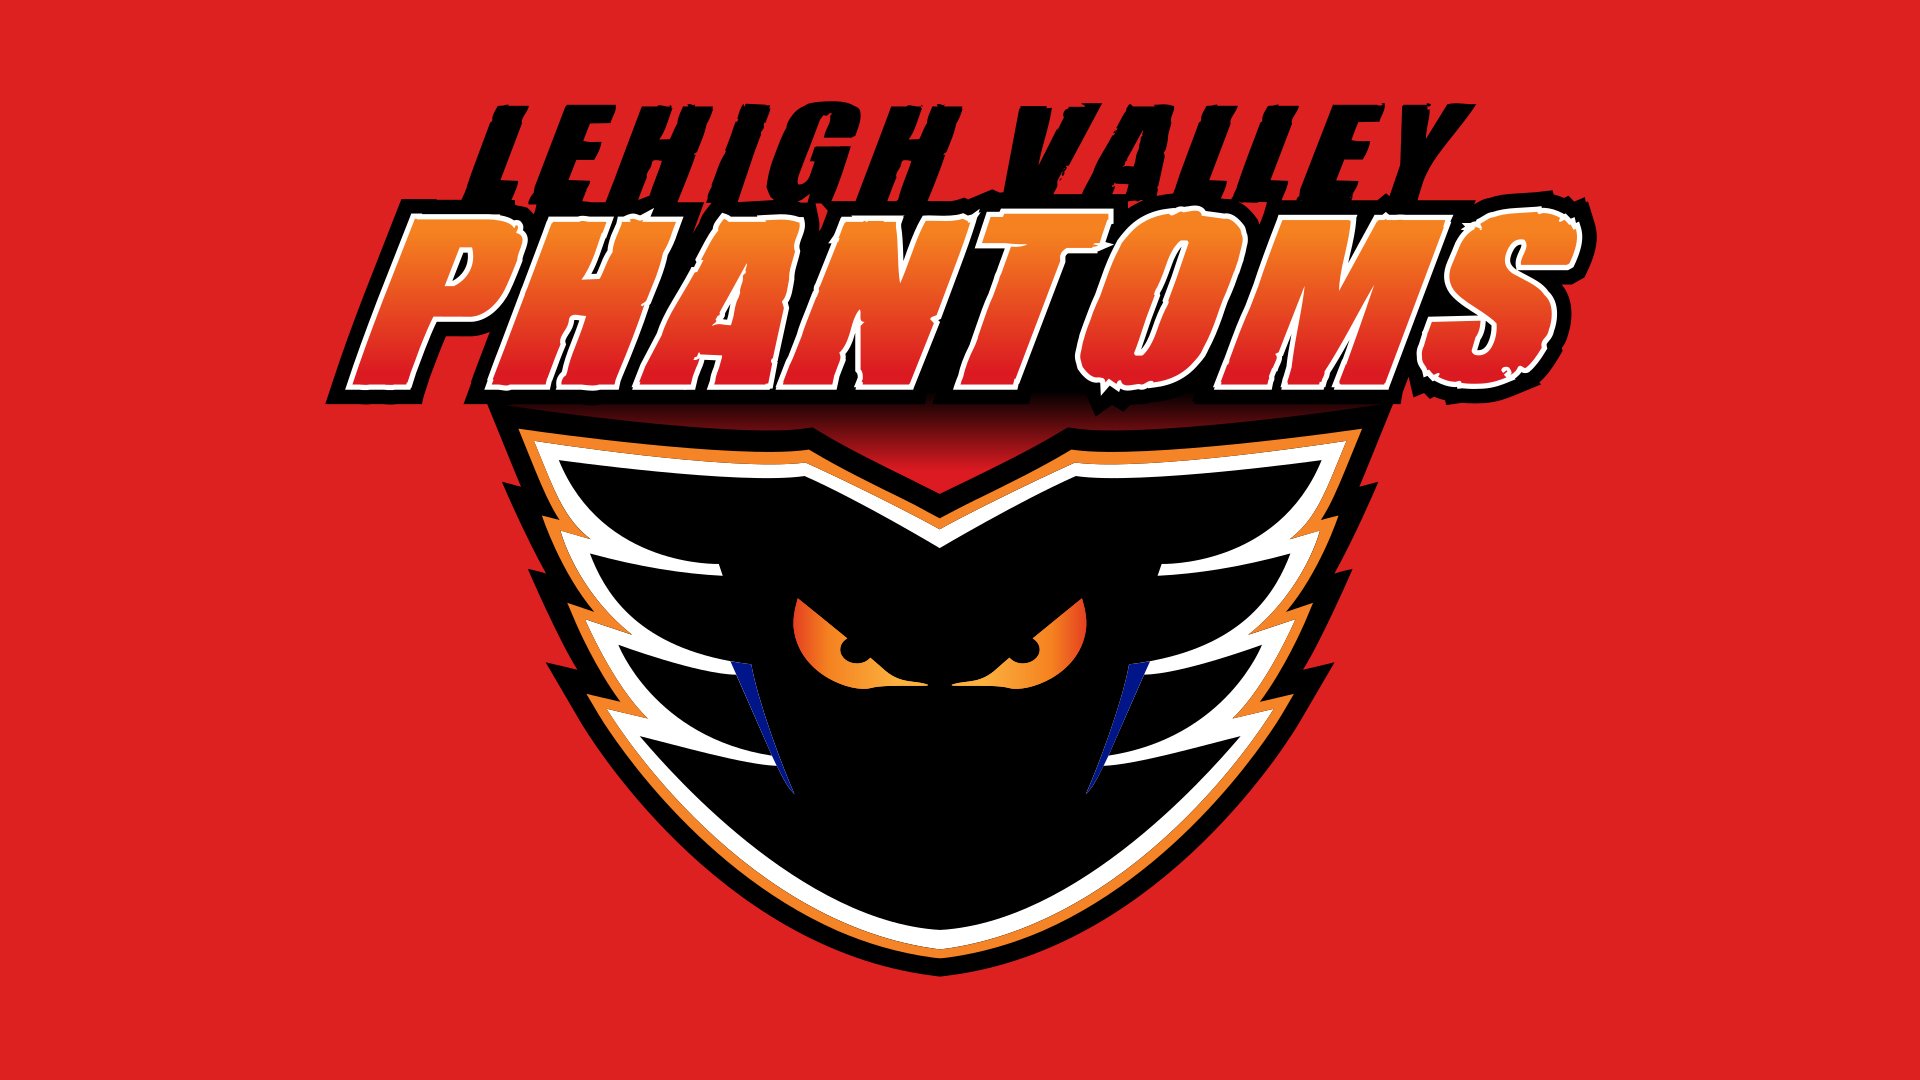 Lehigh Valley Phantoms - Wikipedia